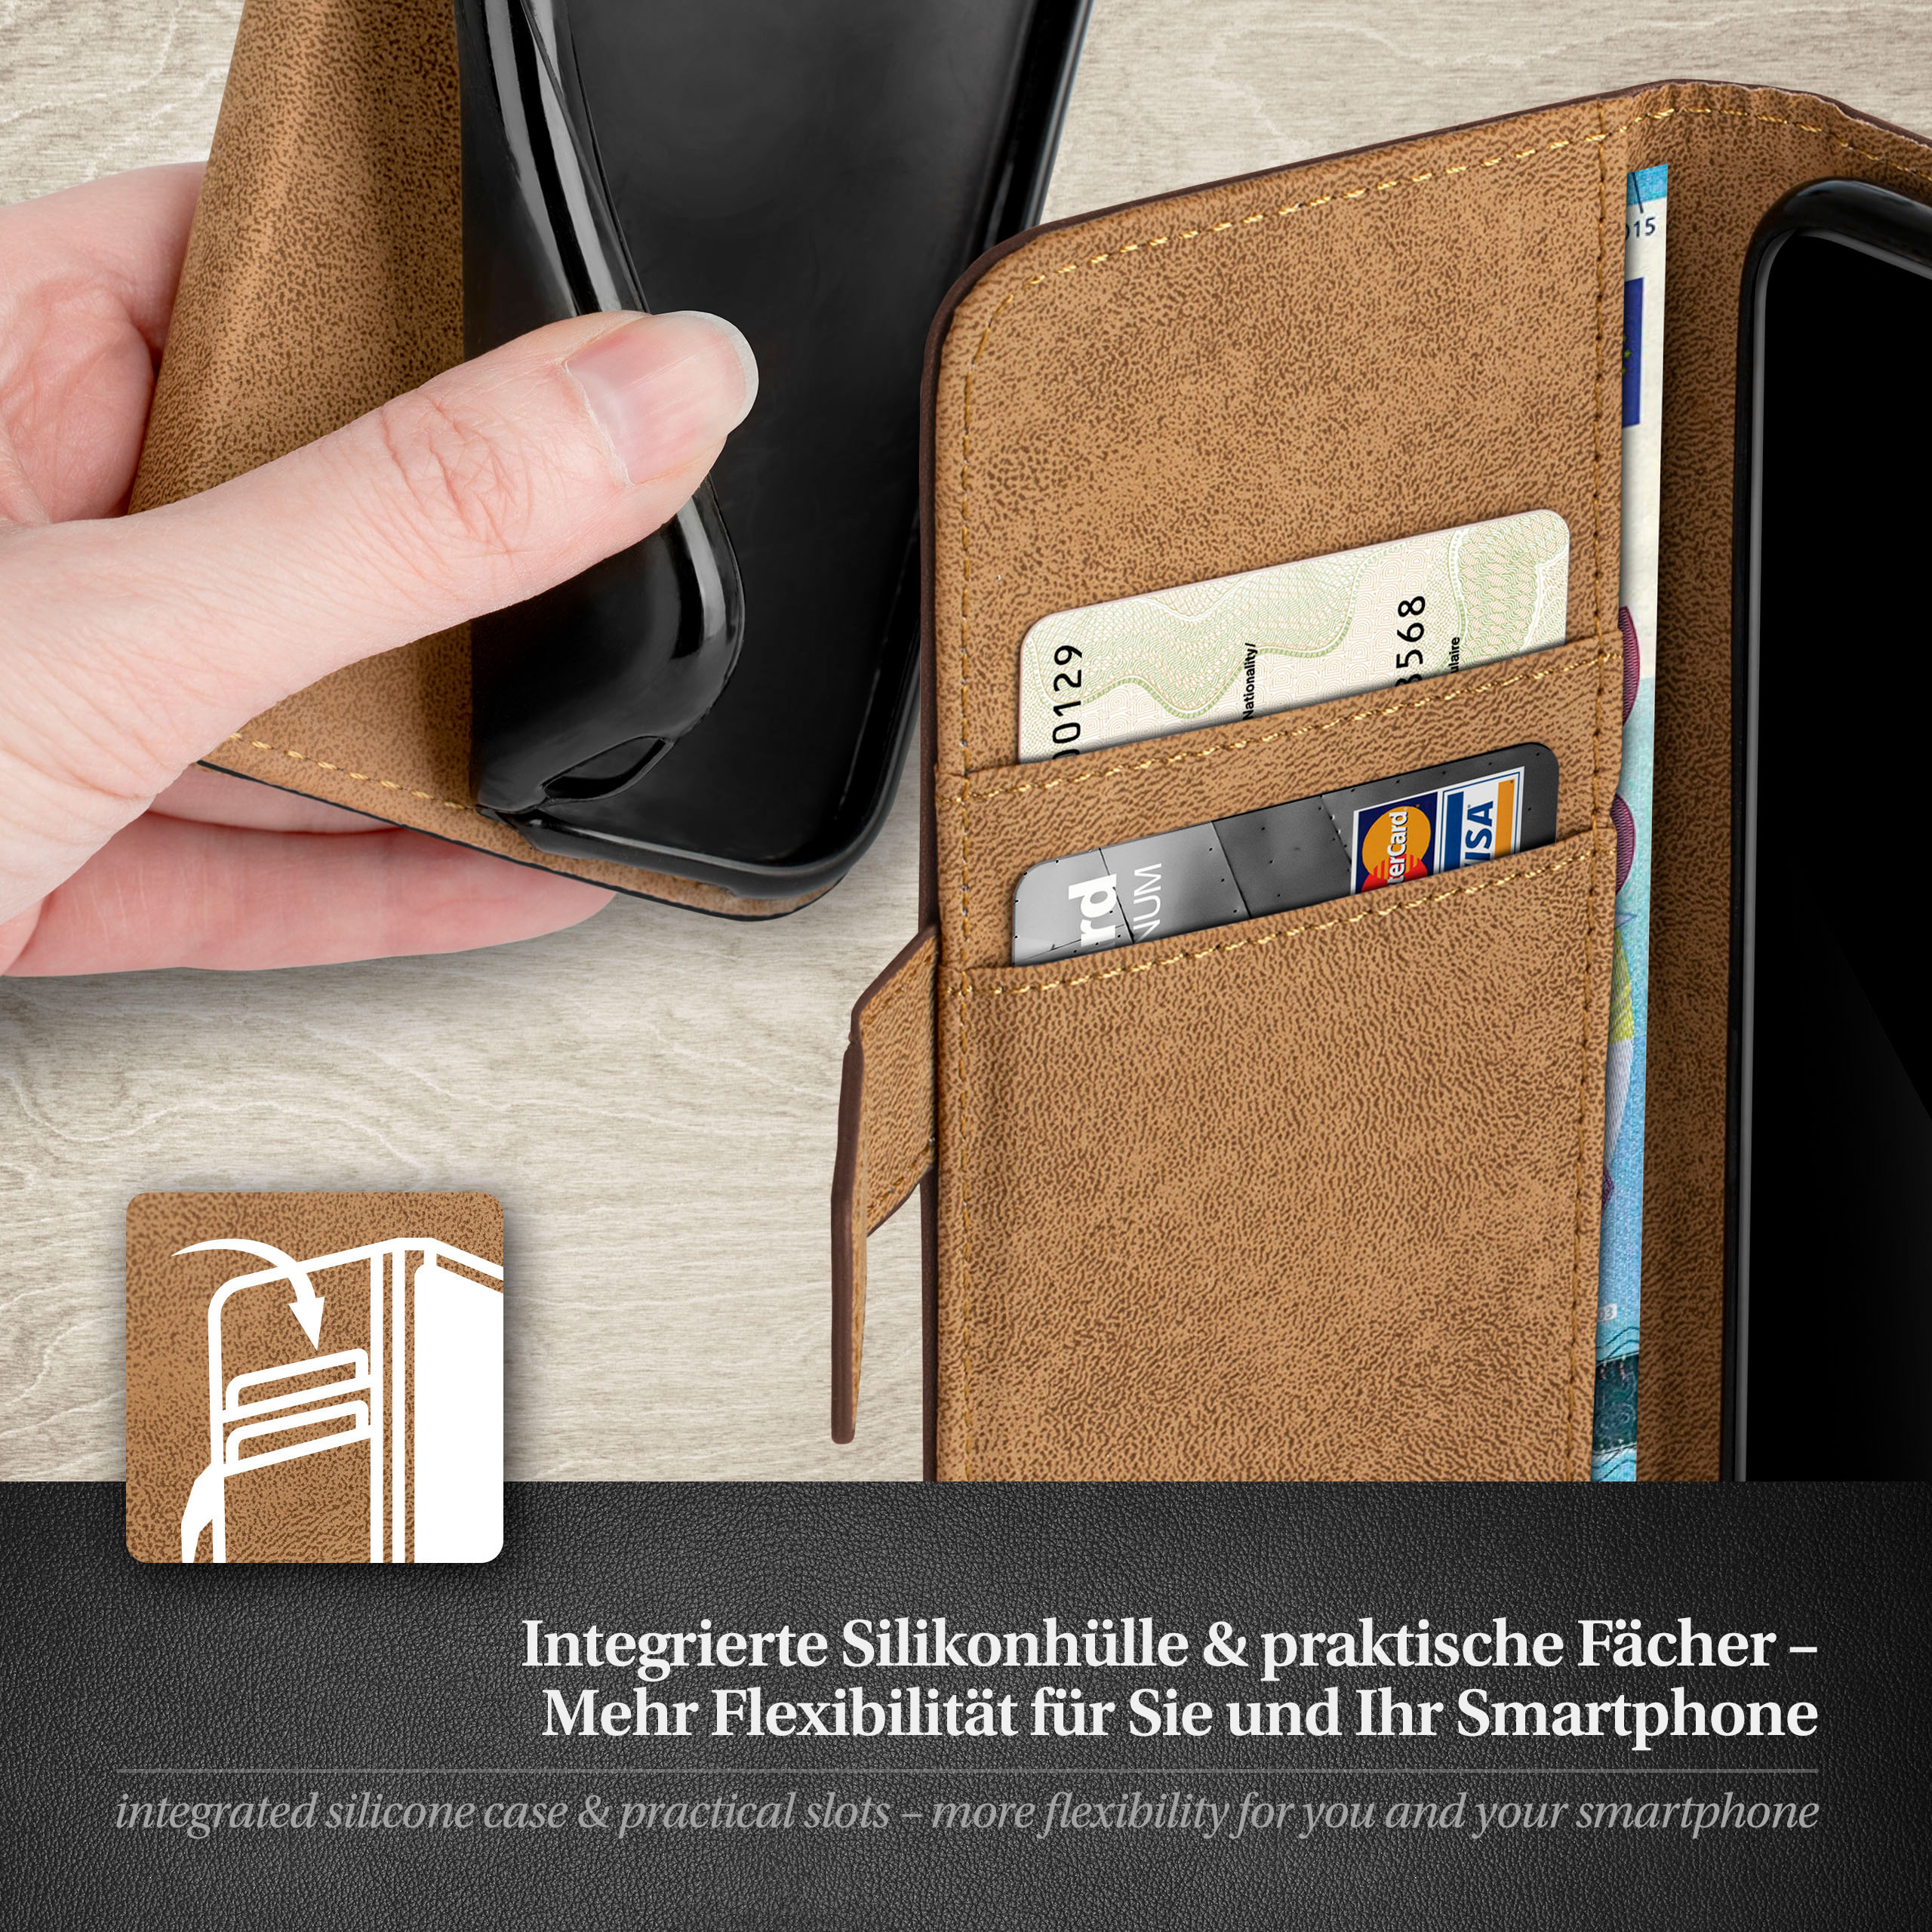 Bookcover, Book Galaxy S9, Samsung, MOEX Oxide-Brown Case,